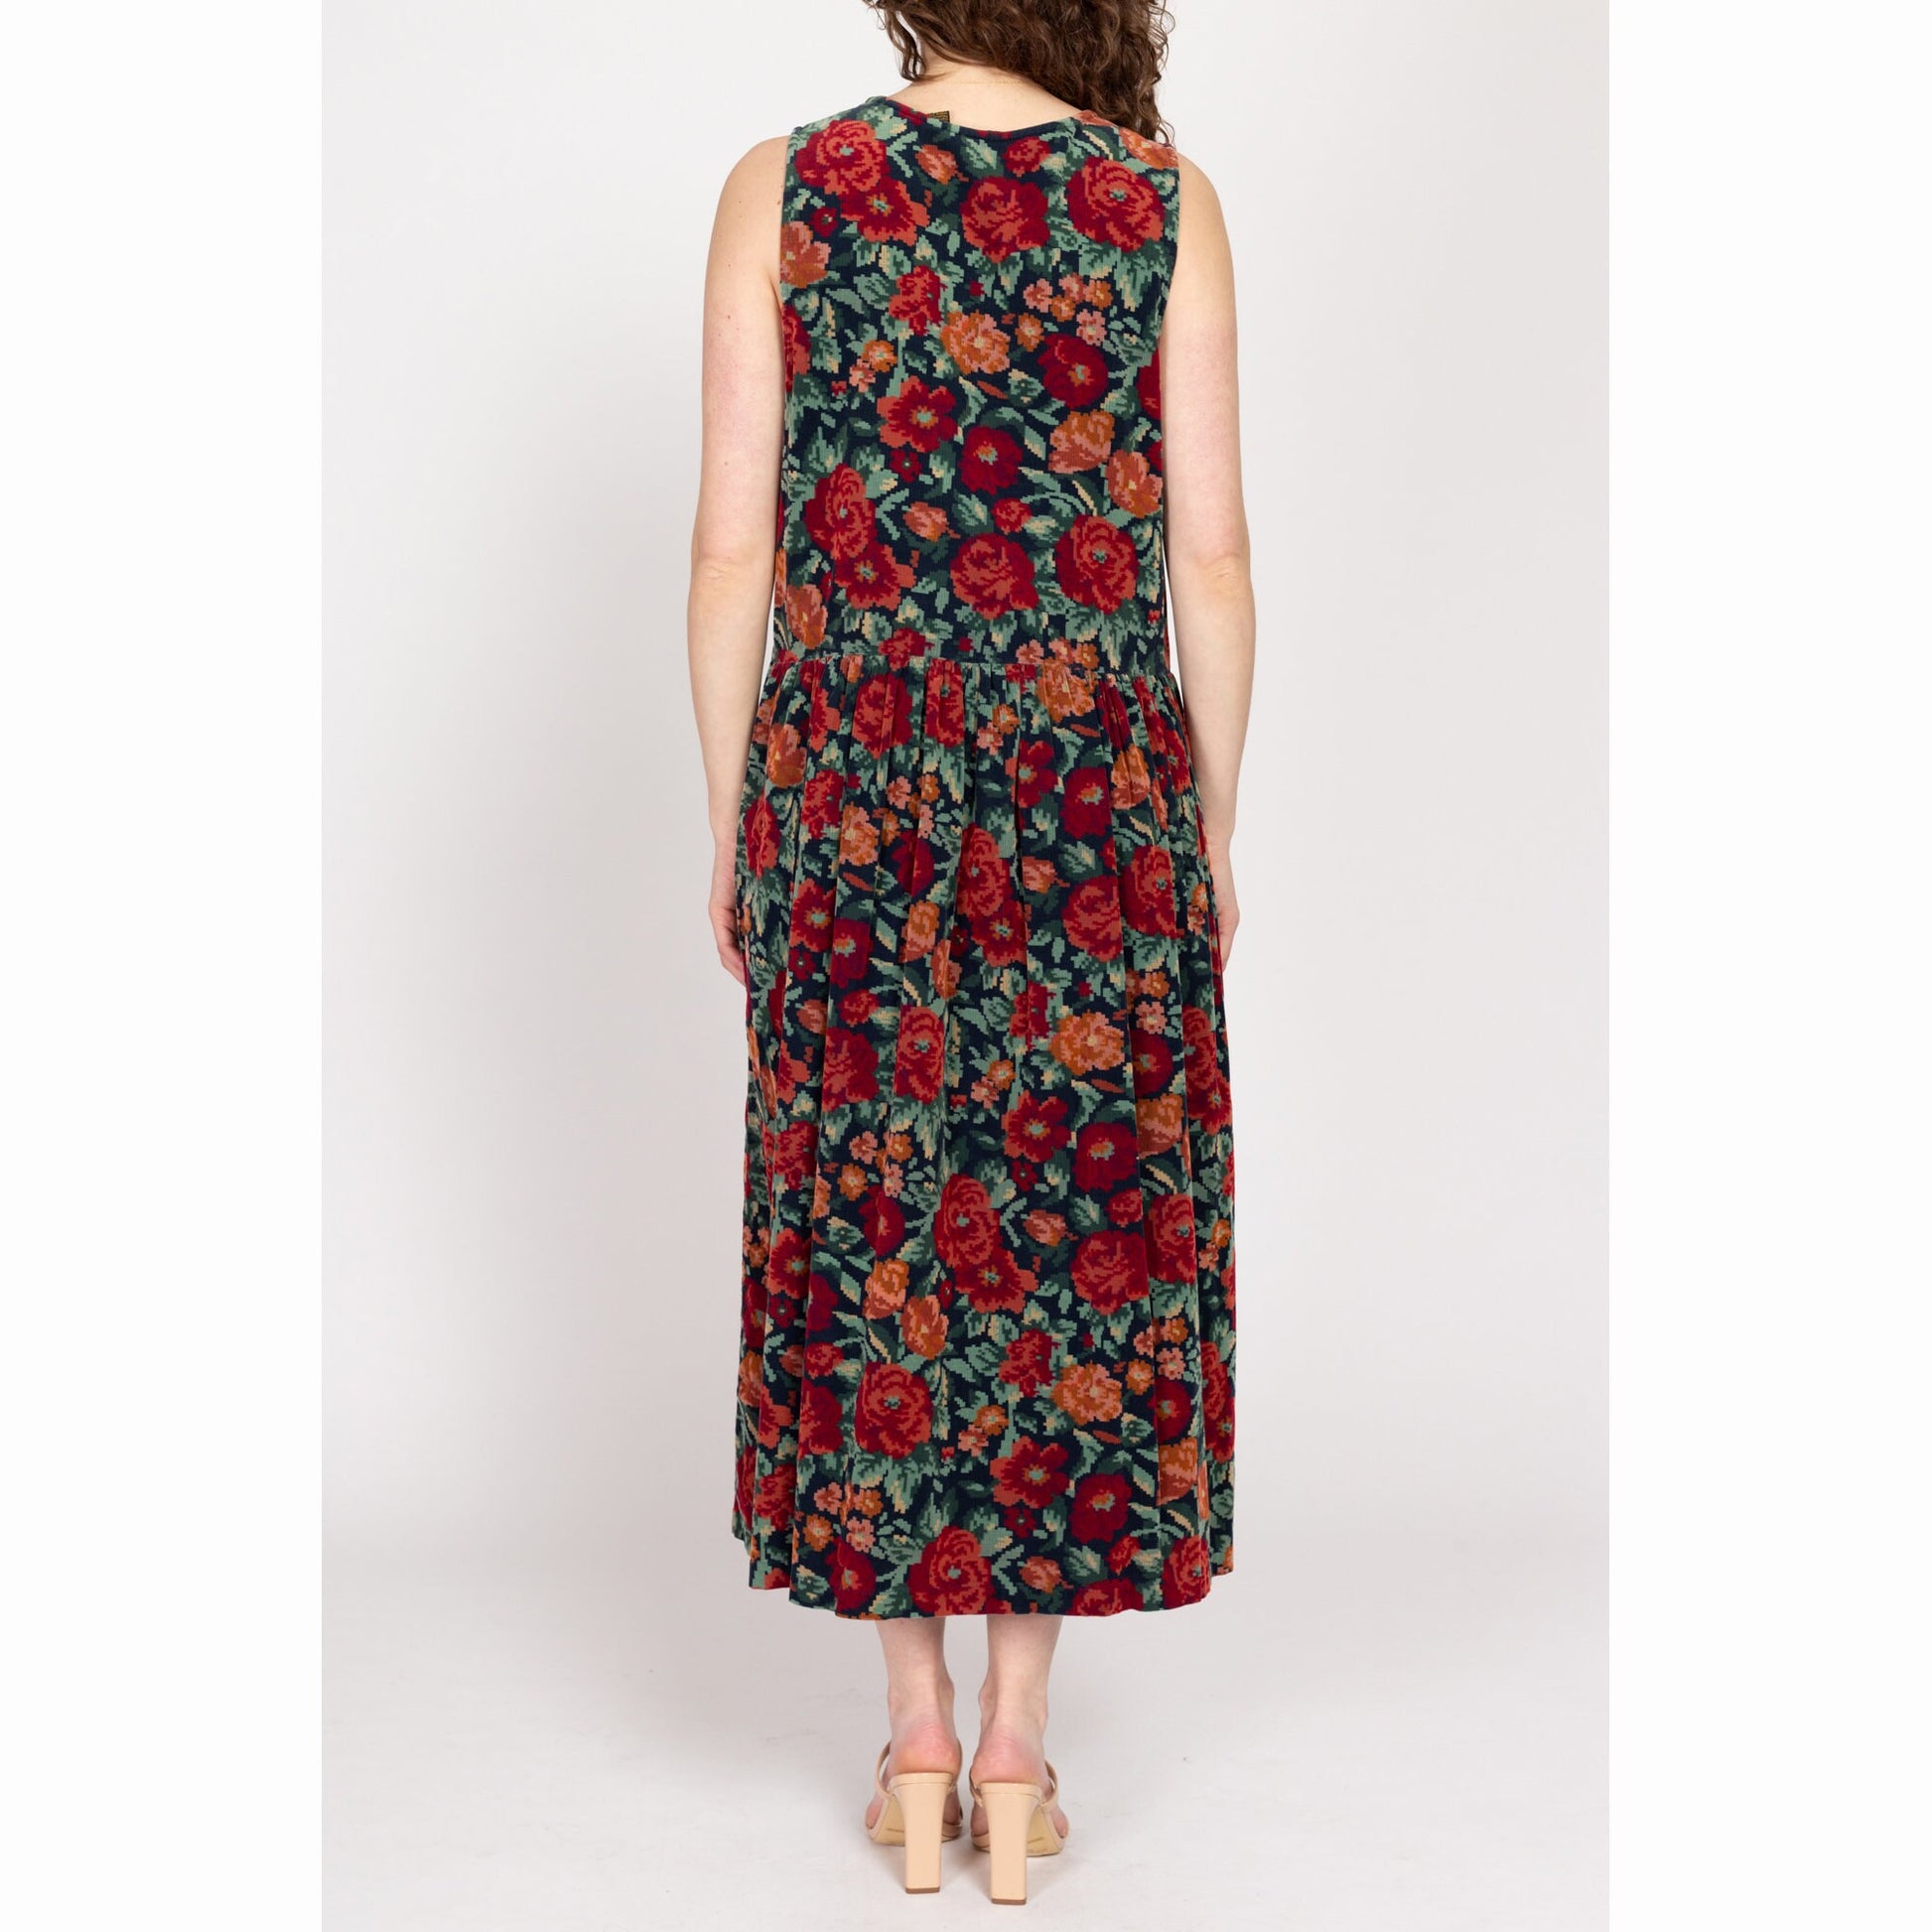 Medium 80s 8-Bit Floral Corduroy Pinafore Dress | Vintage Eddie Bauer Blue Red Cotton Sleeveless Maxi Jumper Dress